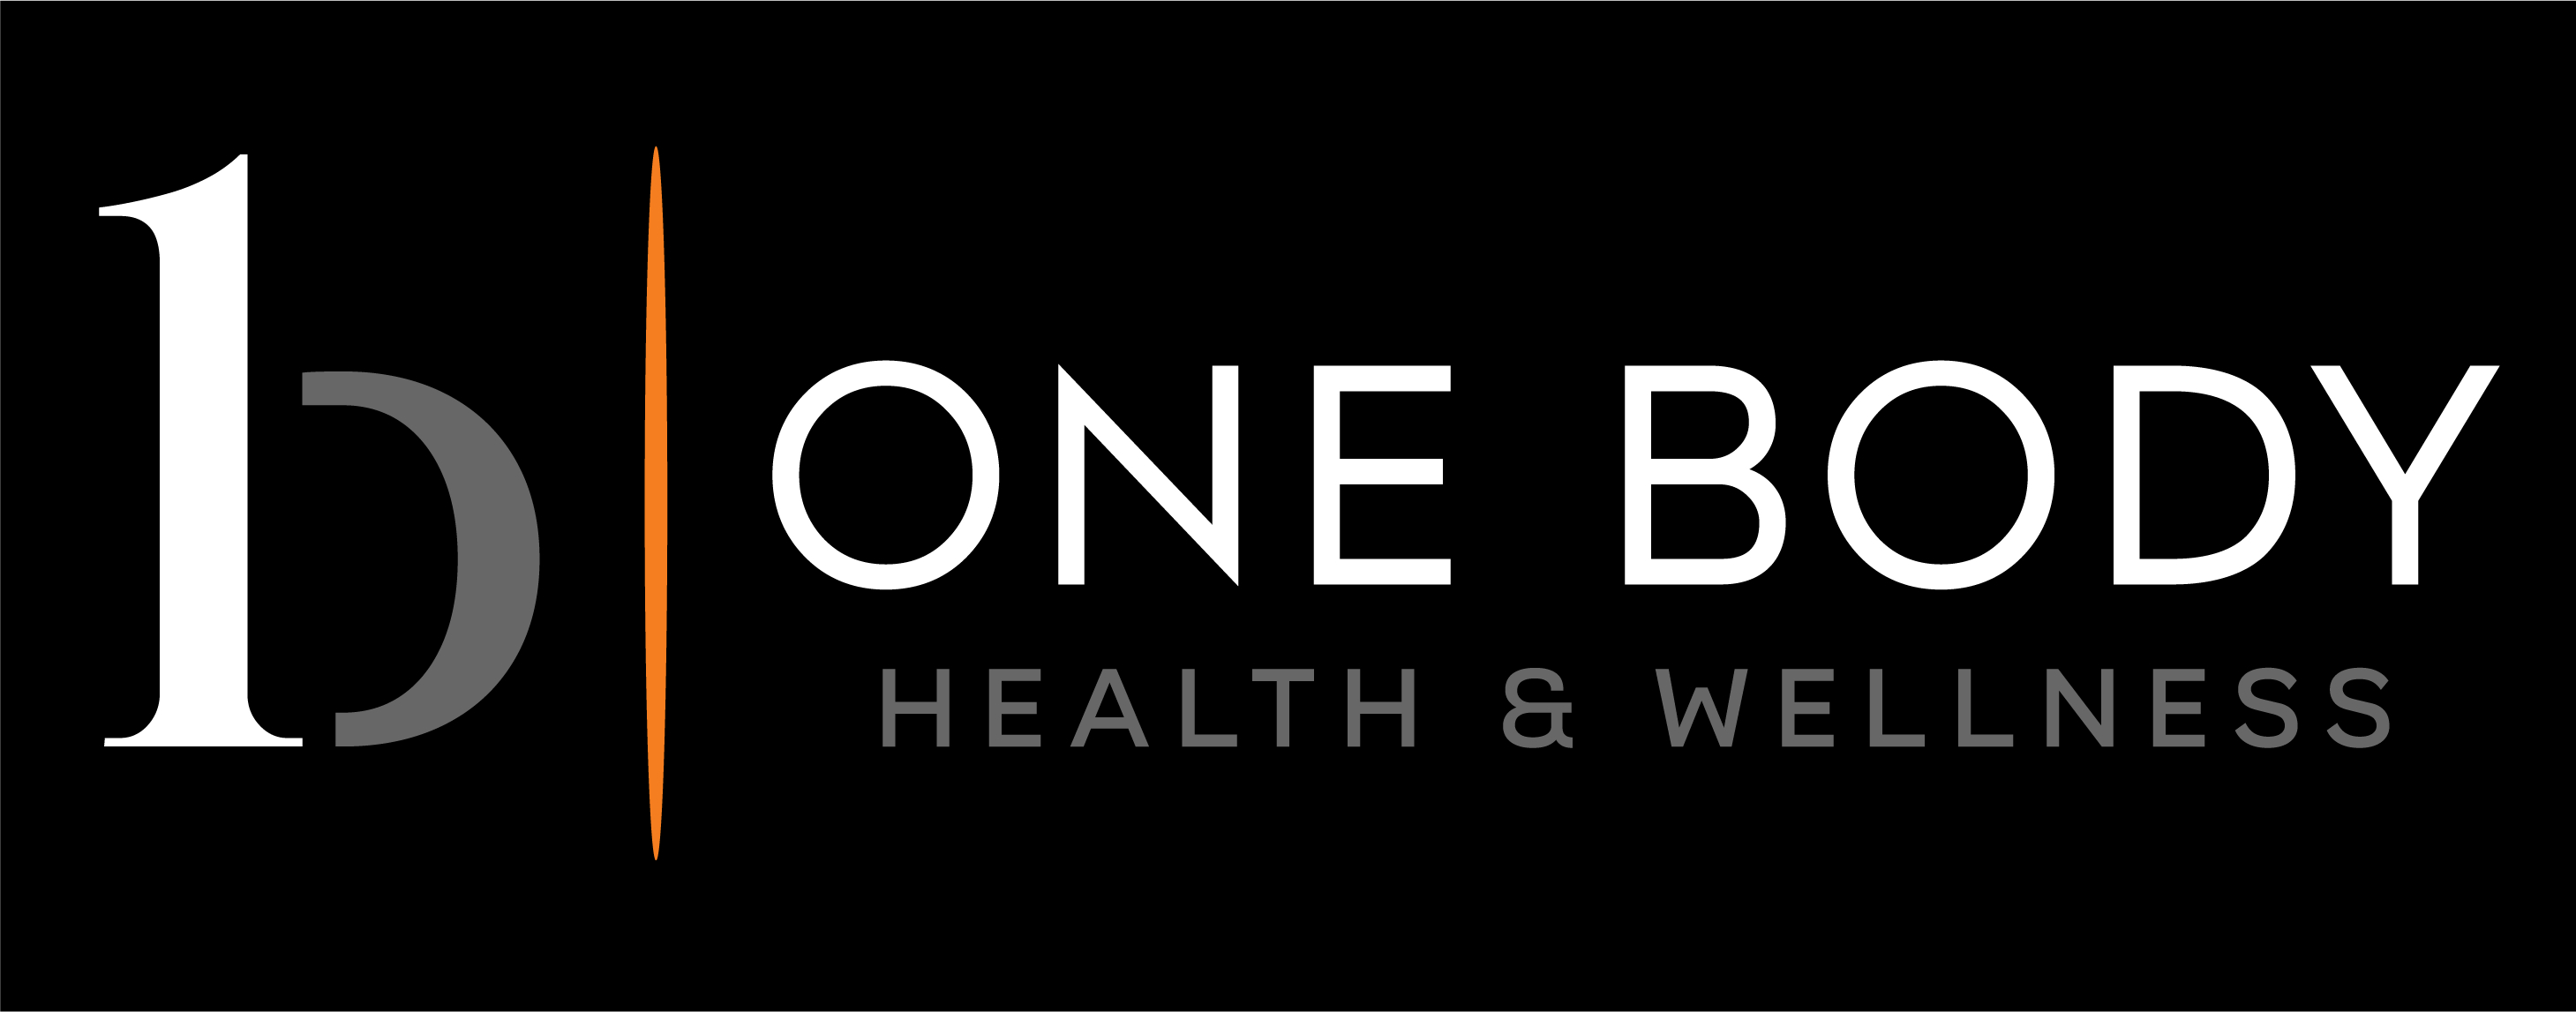 One-Body-Health-_-Wellness-logo.jpg